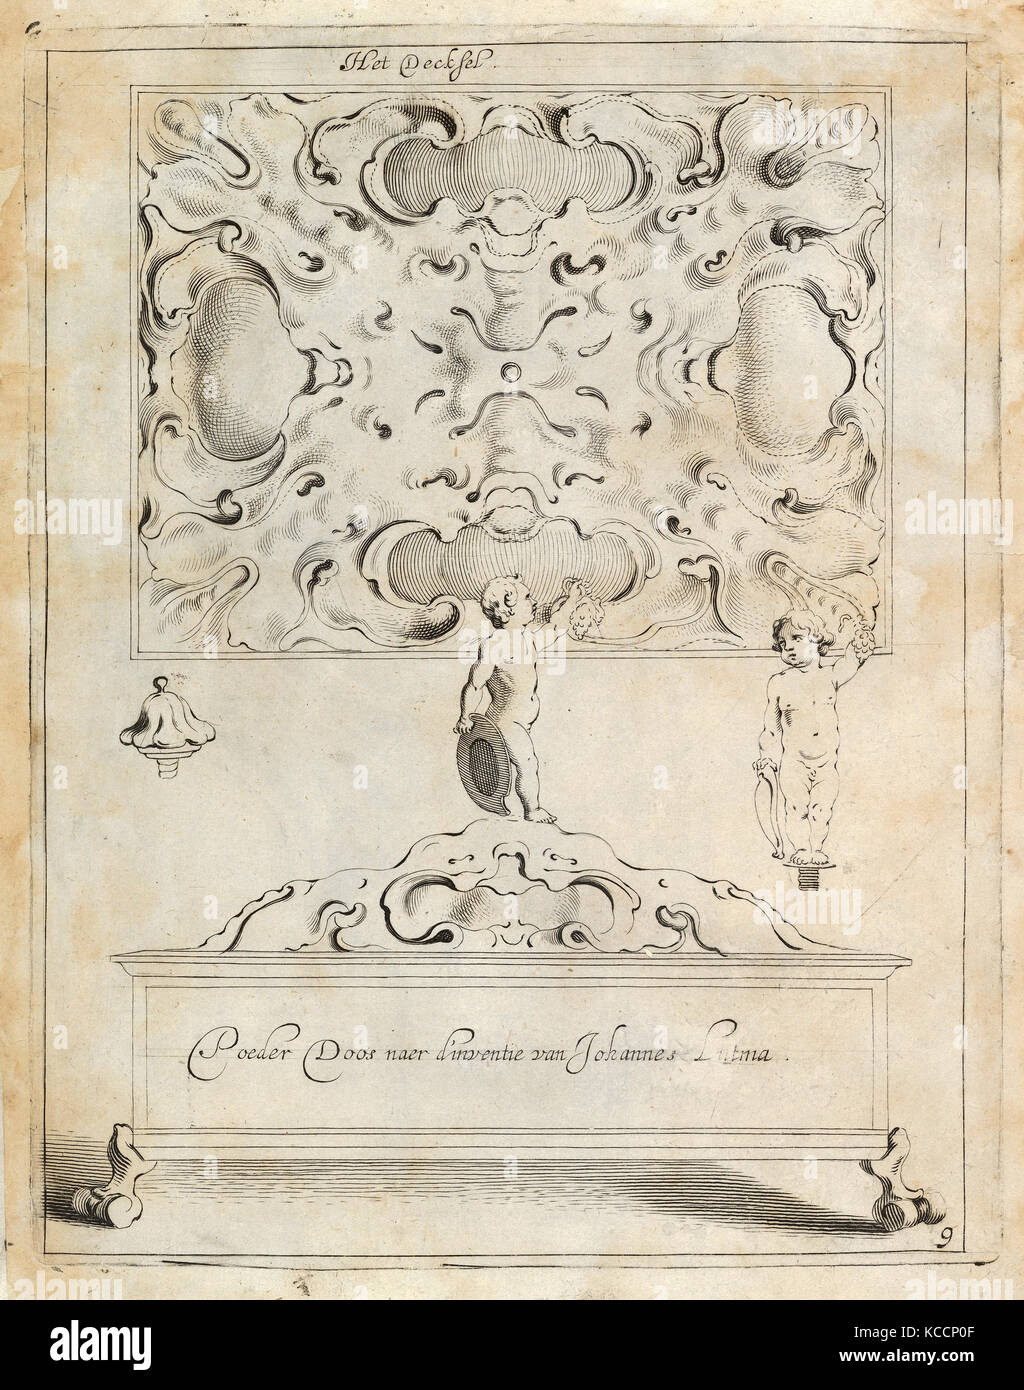 Verscheyde Constige Vindigen om nella gotta, argento, Hout en Steen te wercken (piastra 9), inciso da Michiel Mosyn (Olandese, nato 1630 Foto Stock